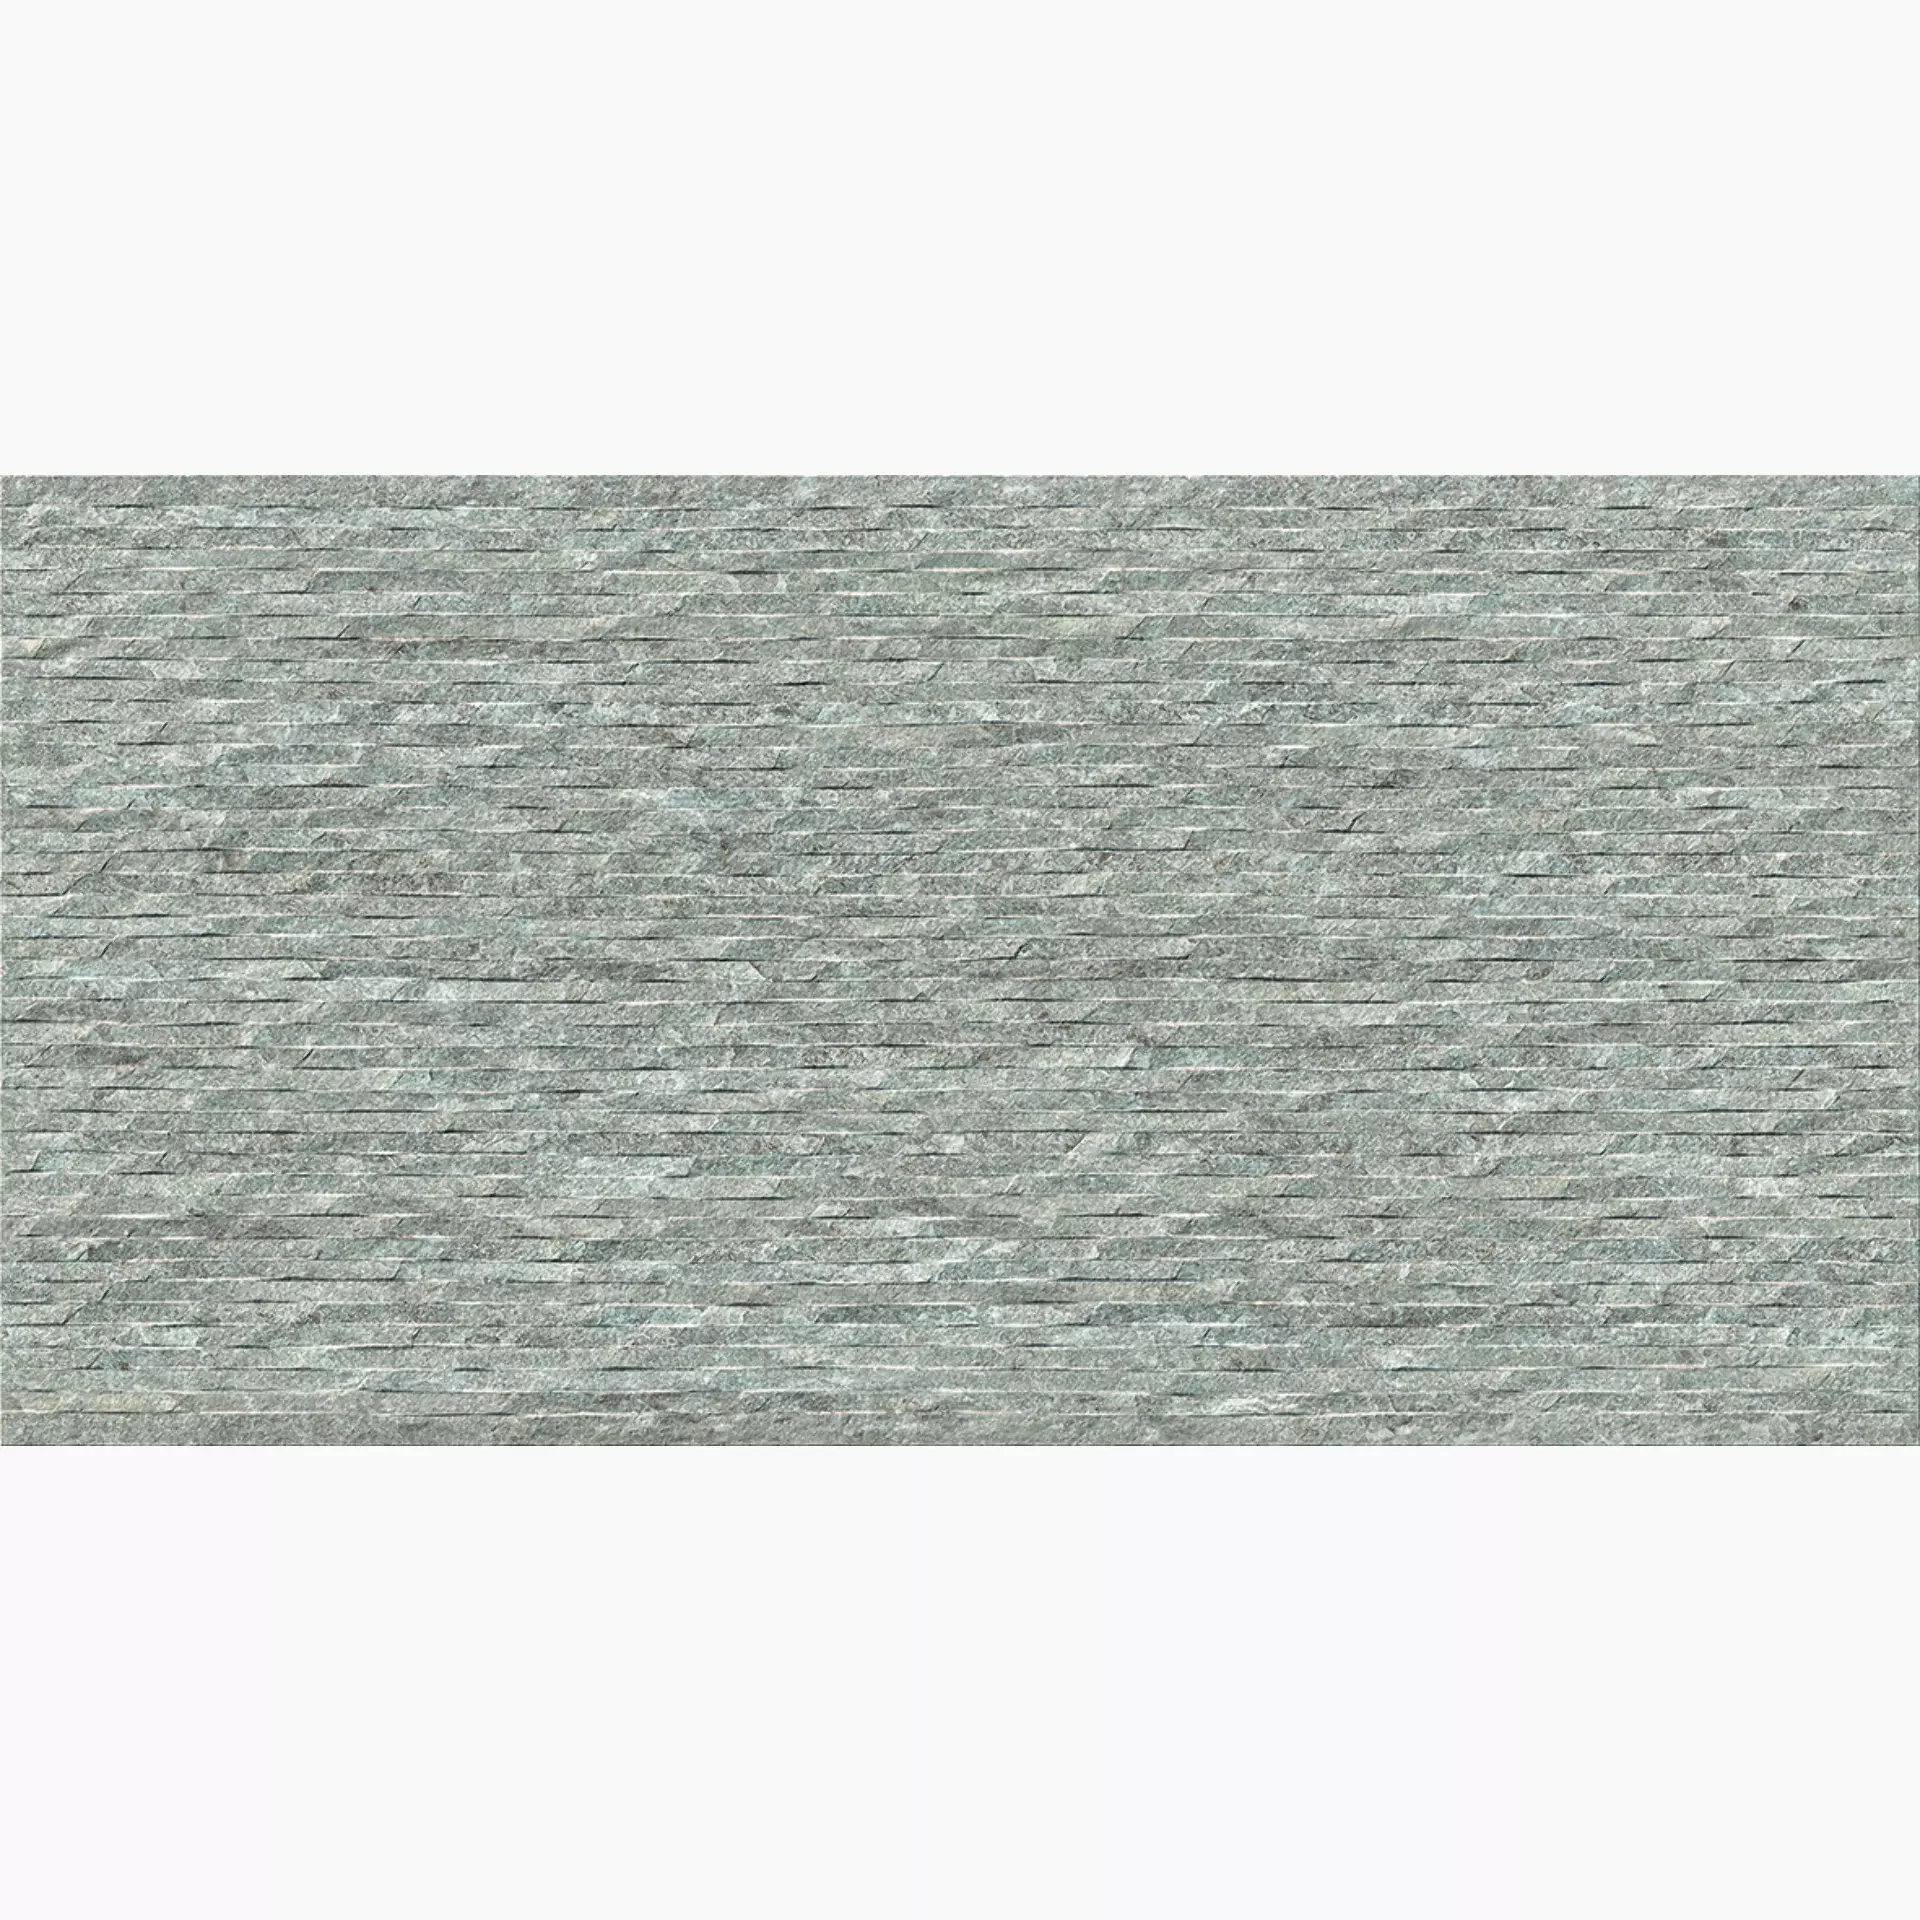 Ergon Oros Stone Grey Naturale EKW7 60x120cm rectified 9,5mm